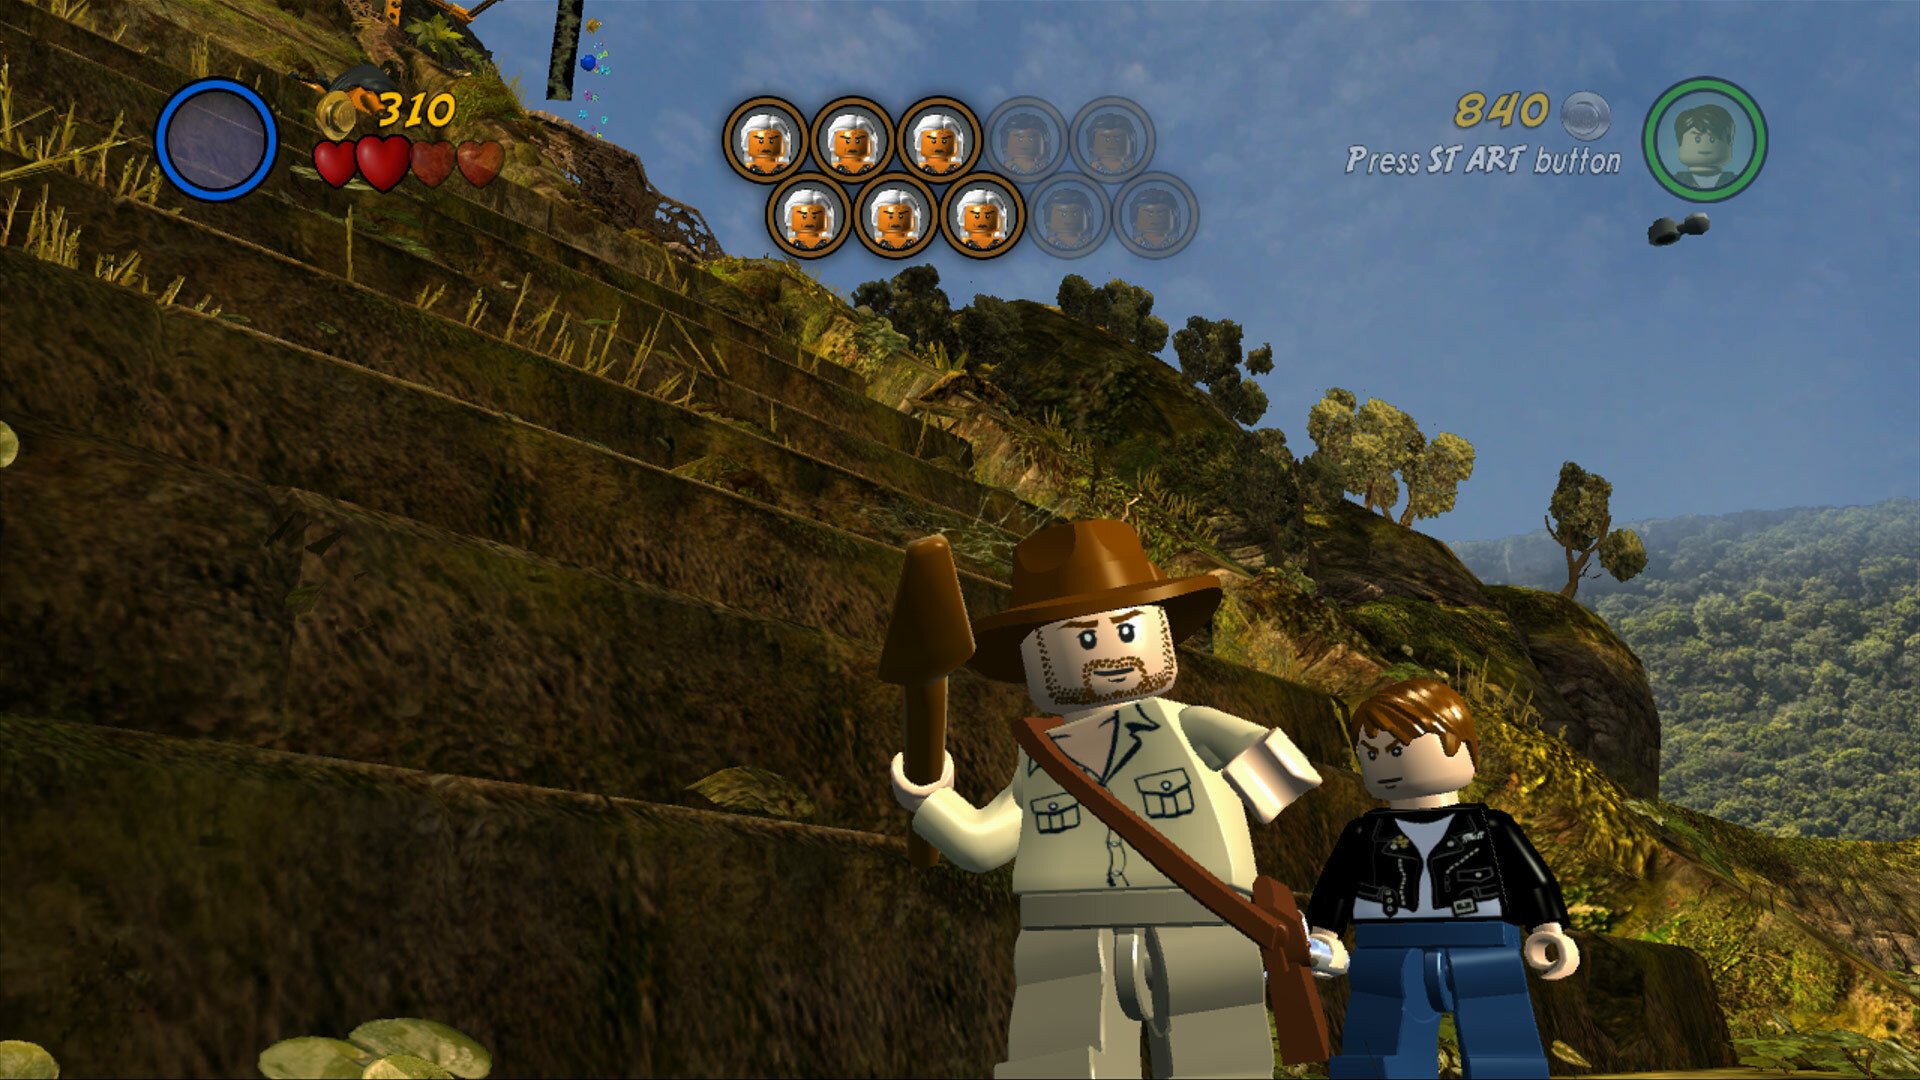 Скриншот 1 к игре LEGO Indiana Jones 2: The Adventure Continues v1.0 [GOG] (2010)